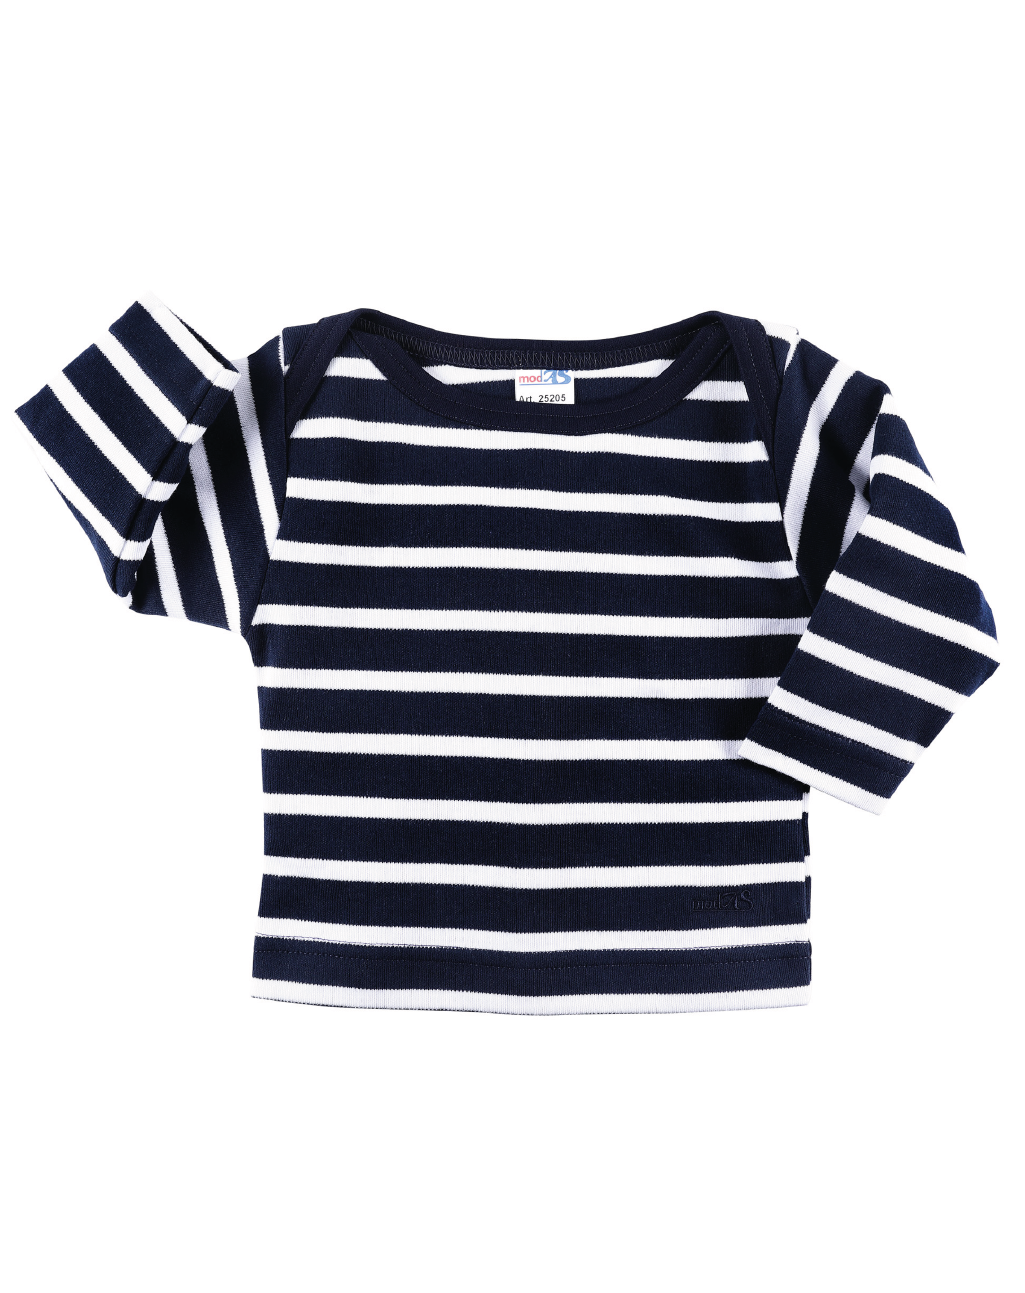 Bretons streepshirt | Baby